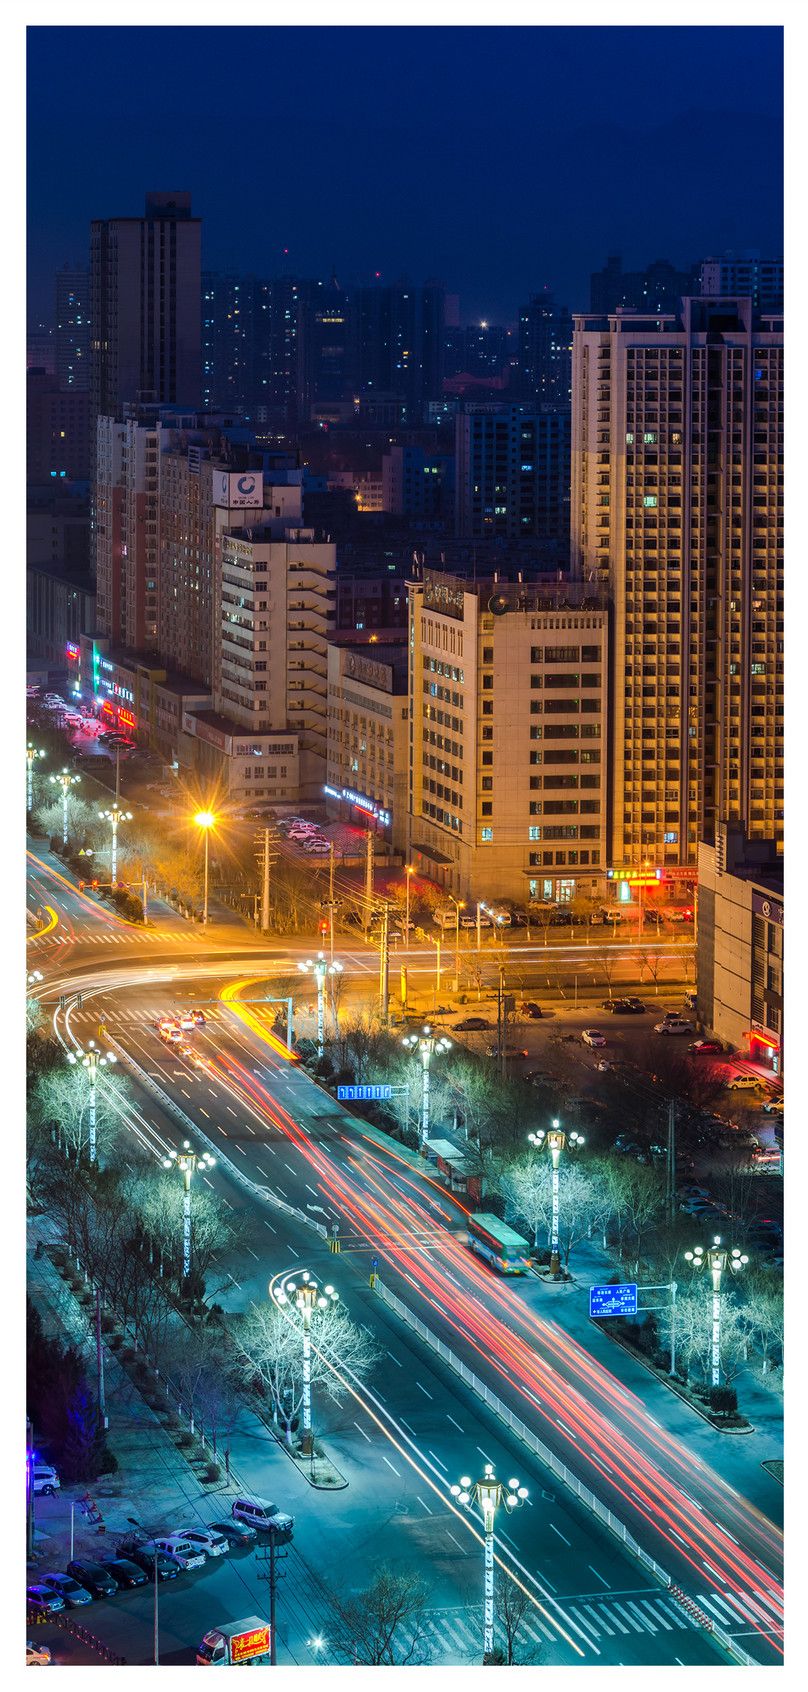 City Nightscape Mobile Wallpaper Background Image Free Download 400426977 Lovepik.com